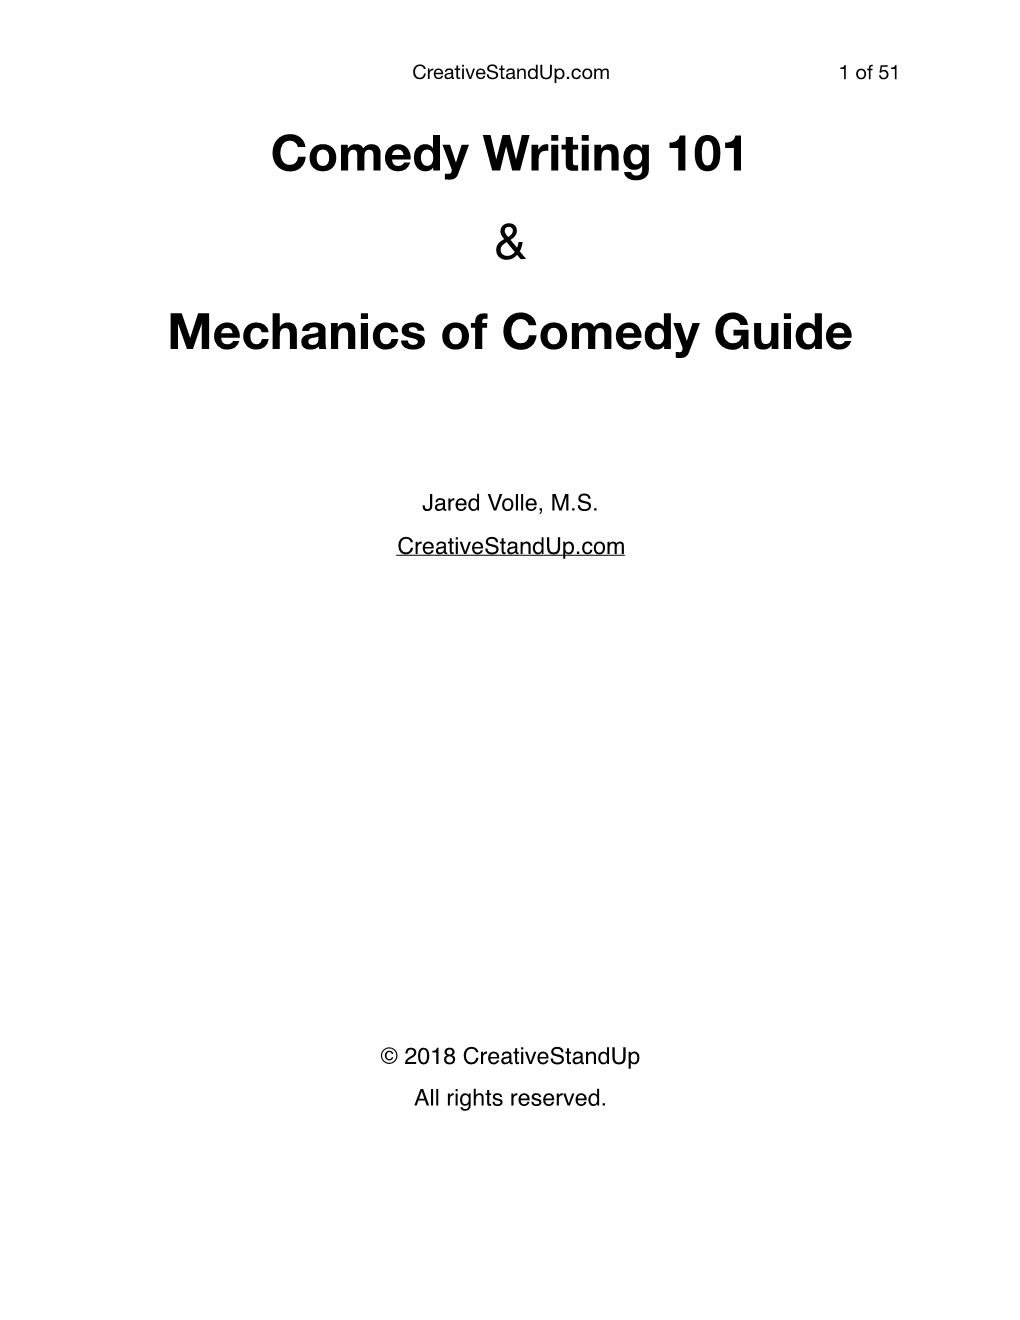 Comedy Writing 101 & Mechanics of Comedy Guide